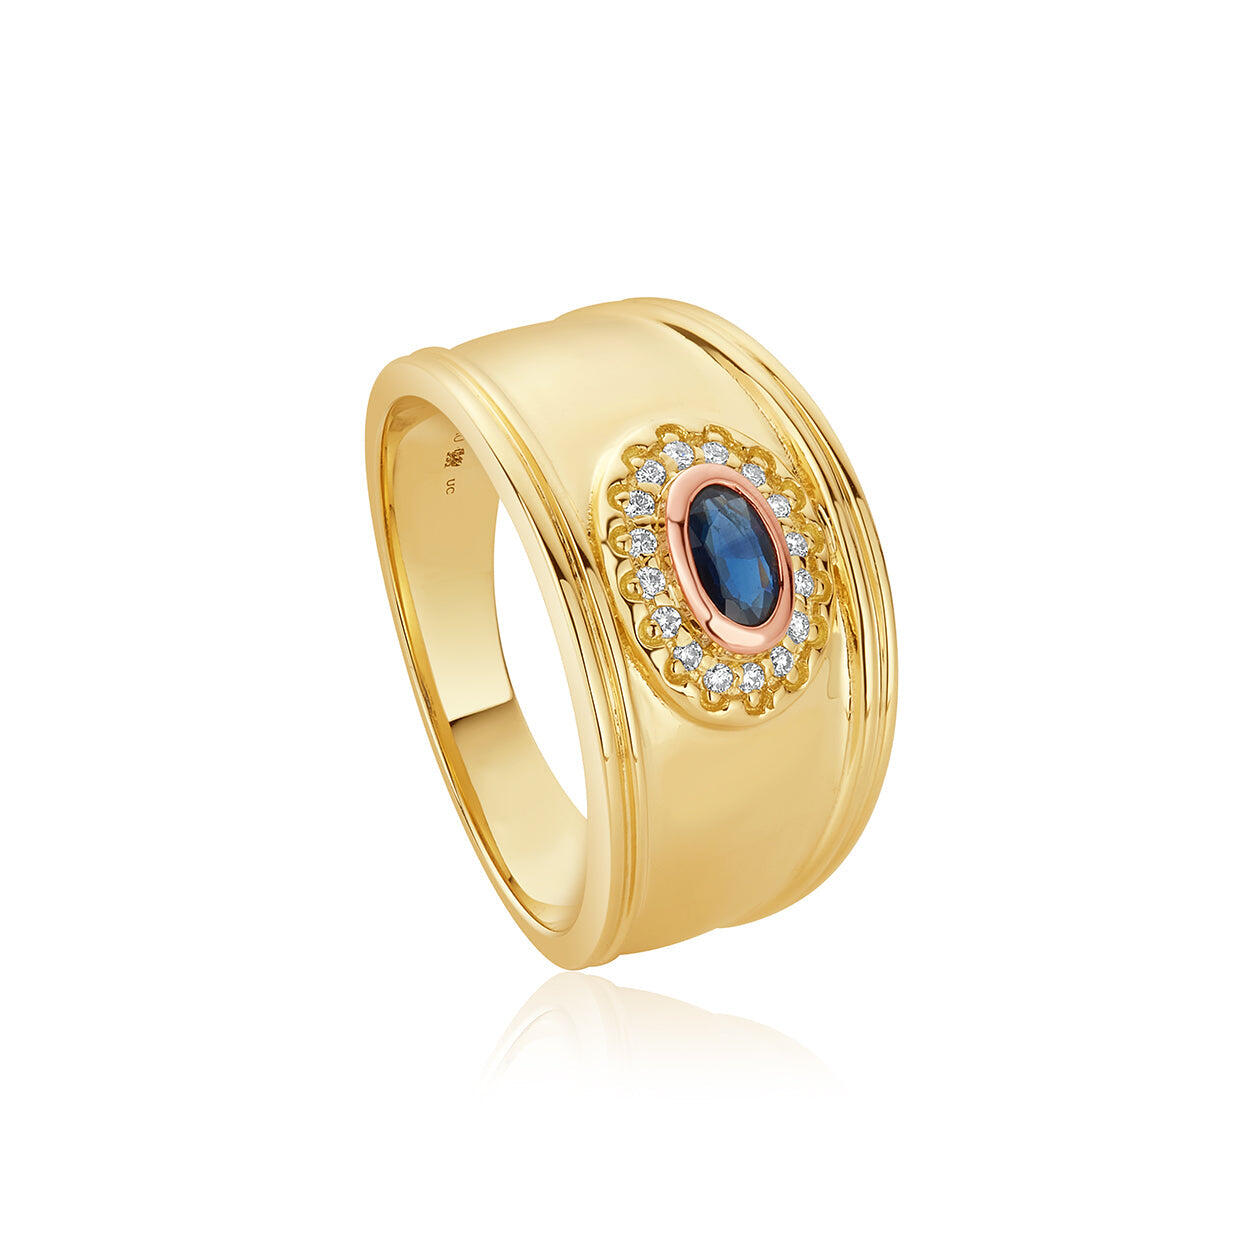 Clogau Princess Diana Sapphire Diamond 9ct Gold Ring - N